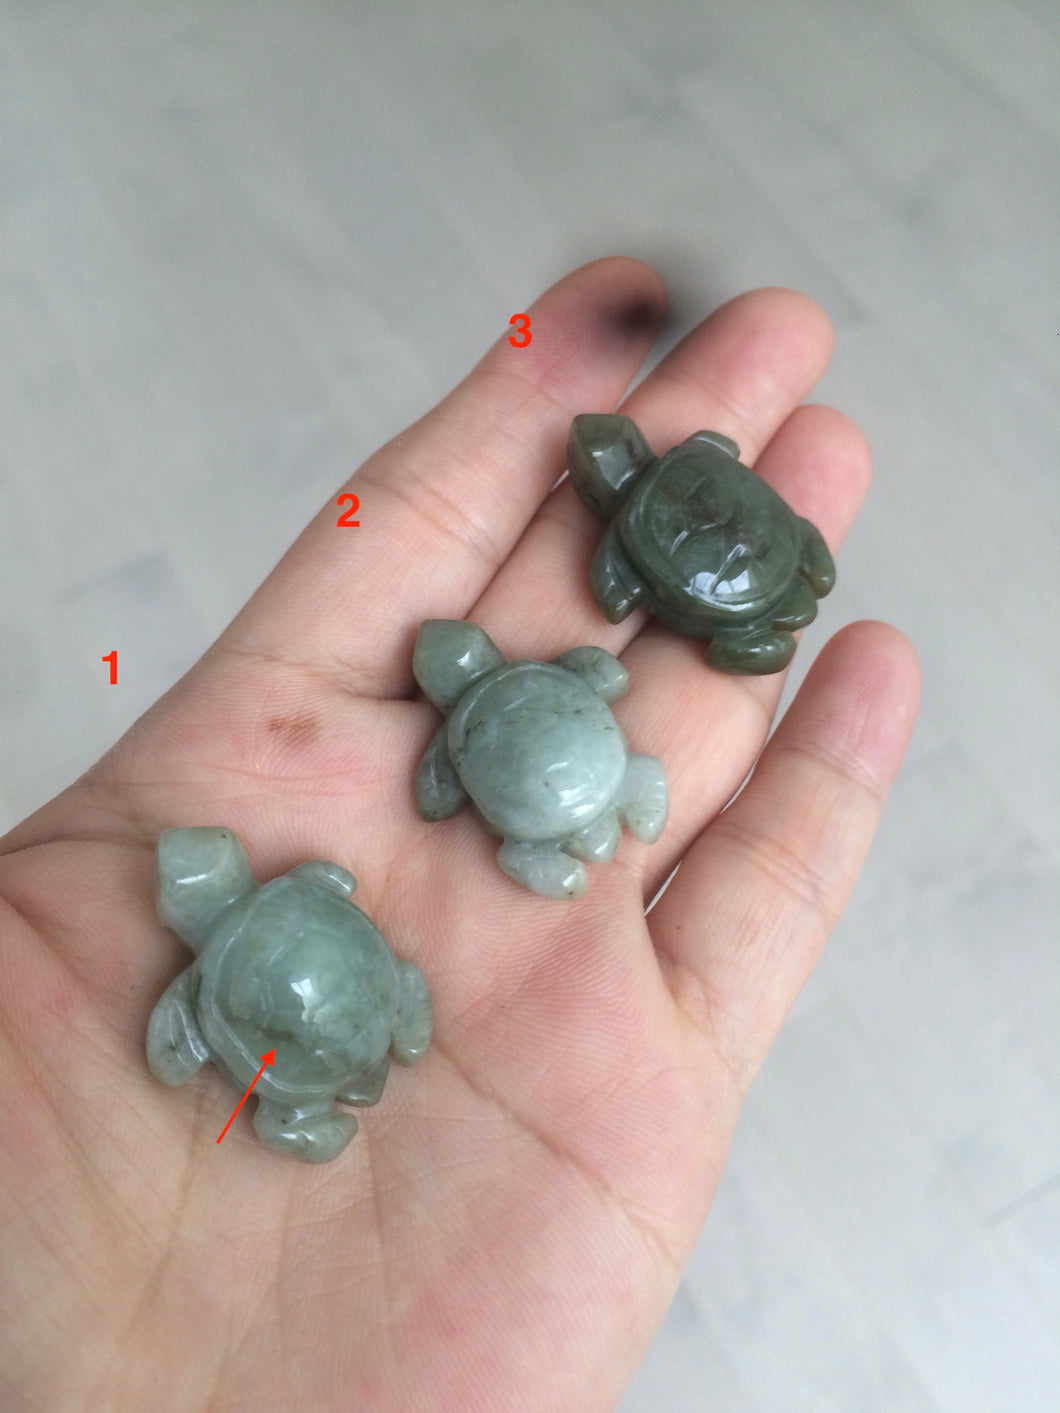 100% natural type A jadeite jade green 3D longevity turtle(长寿龟) worry stone/desk decor A100 Add on item